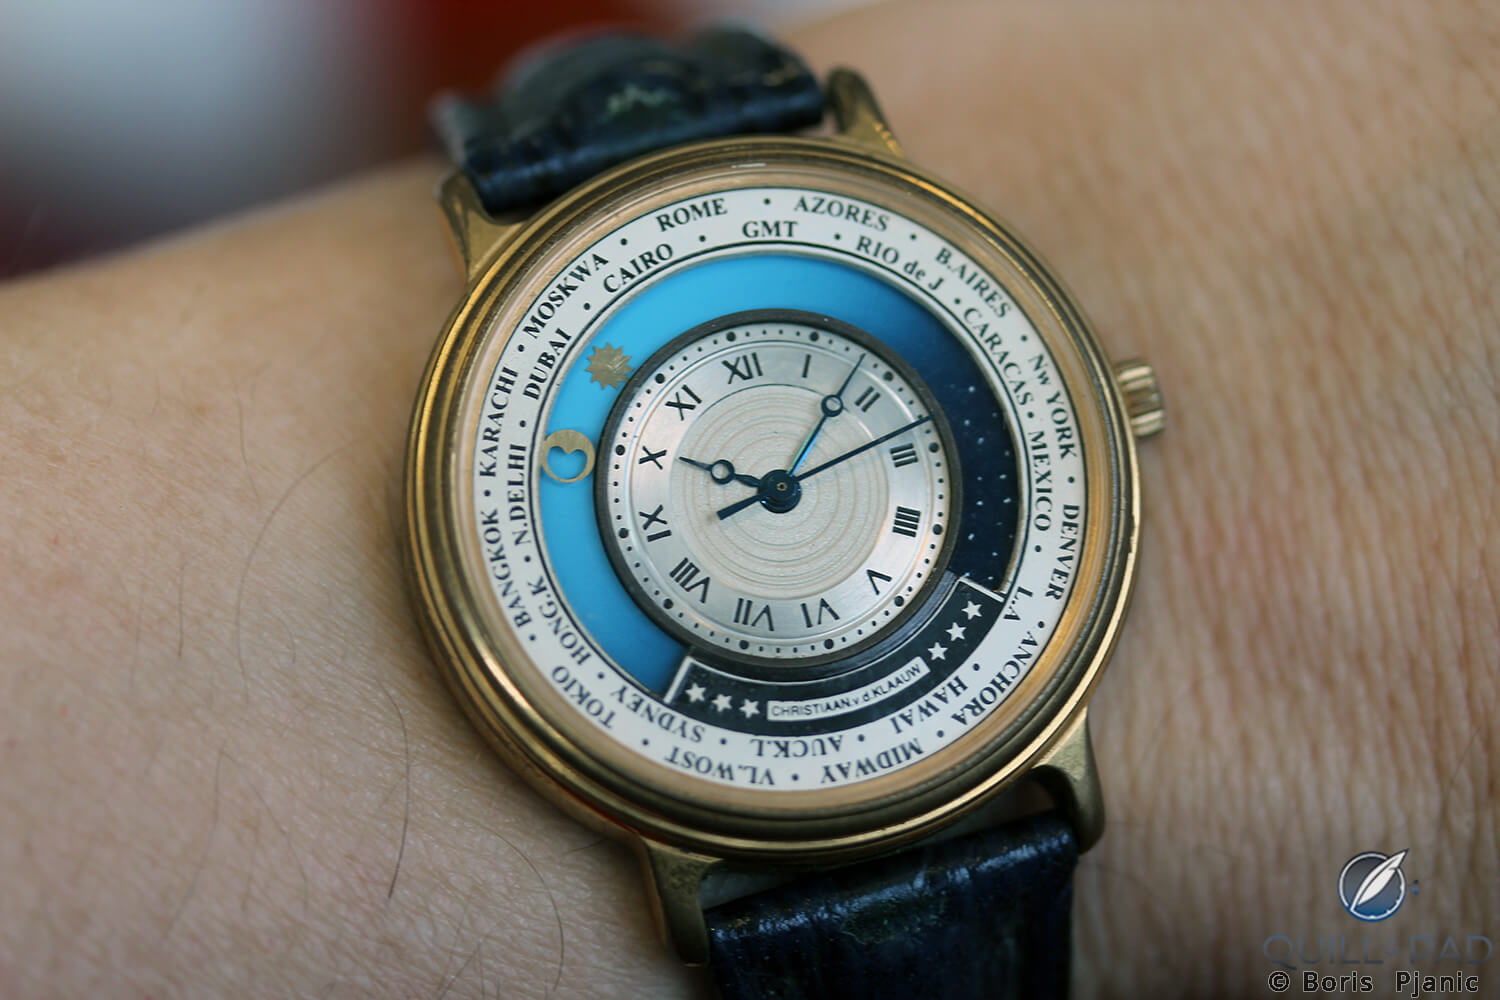 Original Satellite du Monde planetarium wristwatch prototype by Christiaan van der Klaauw